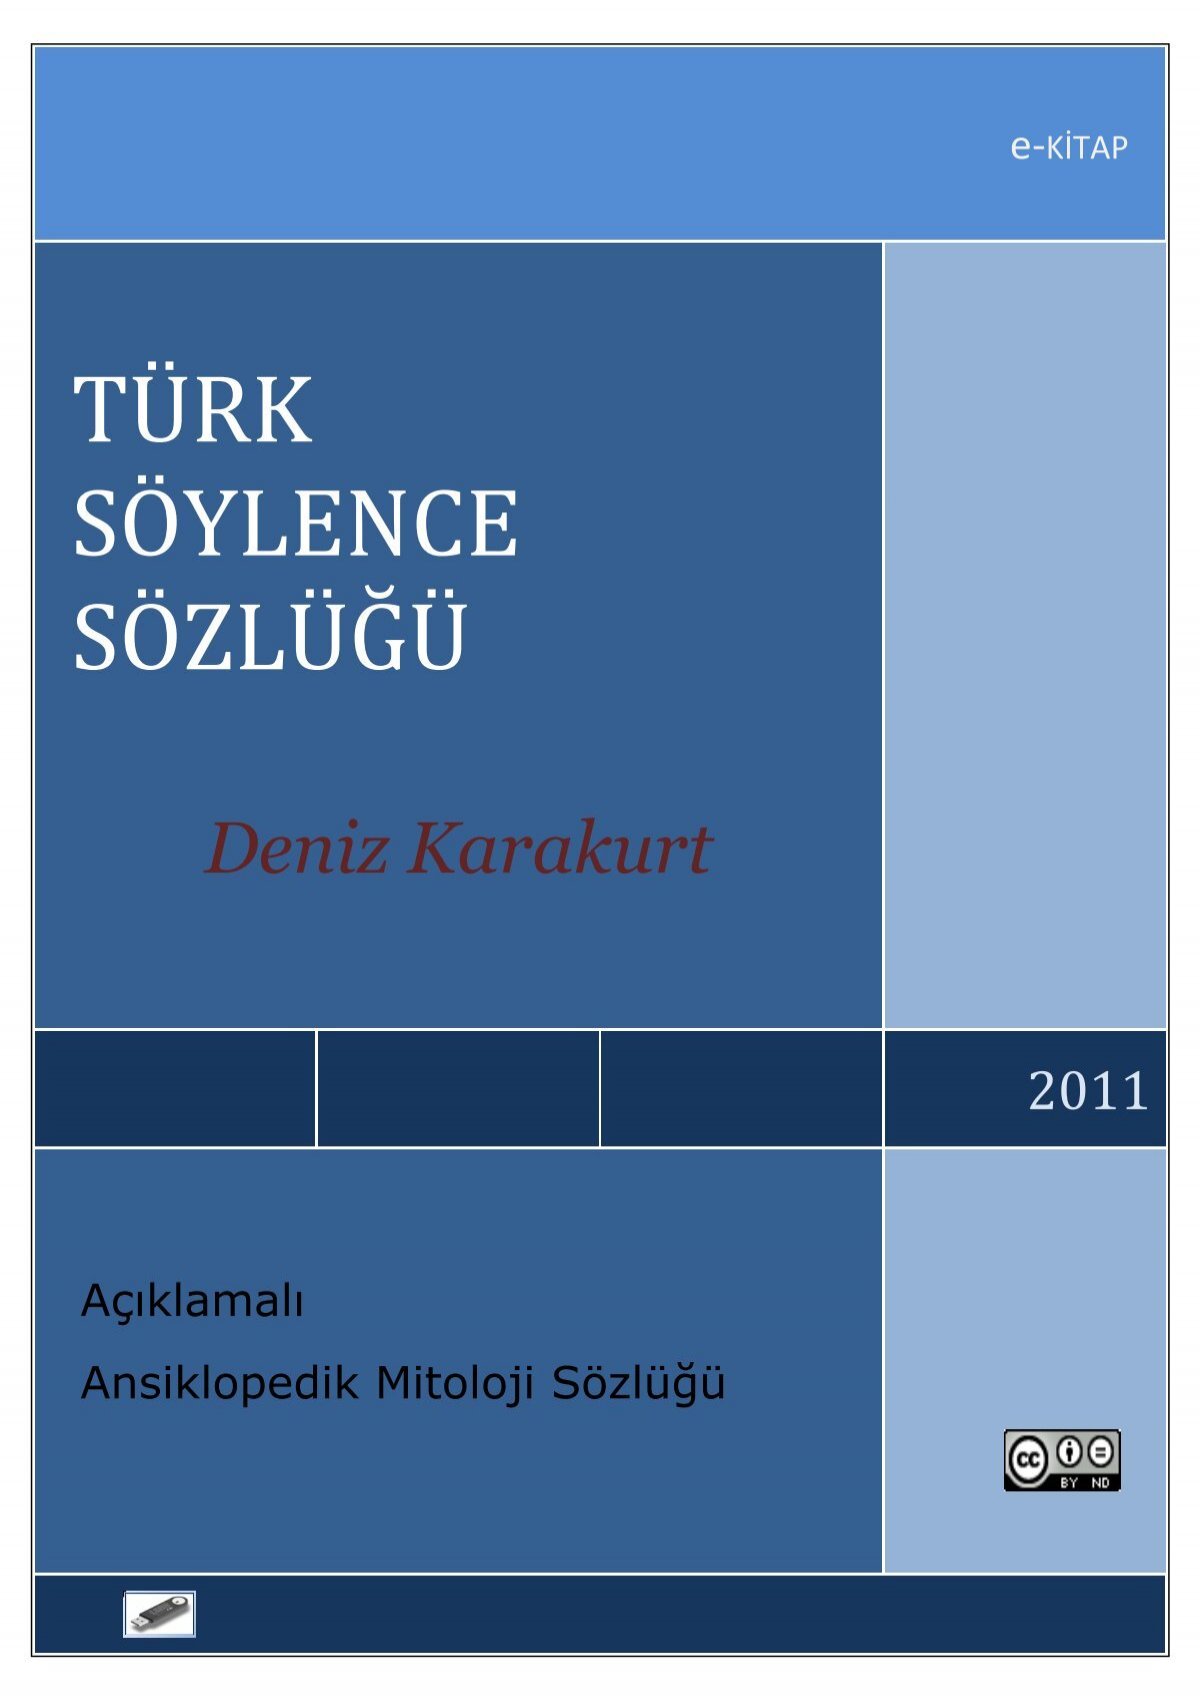 Turk Soylence Sozlugu